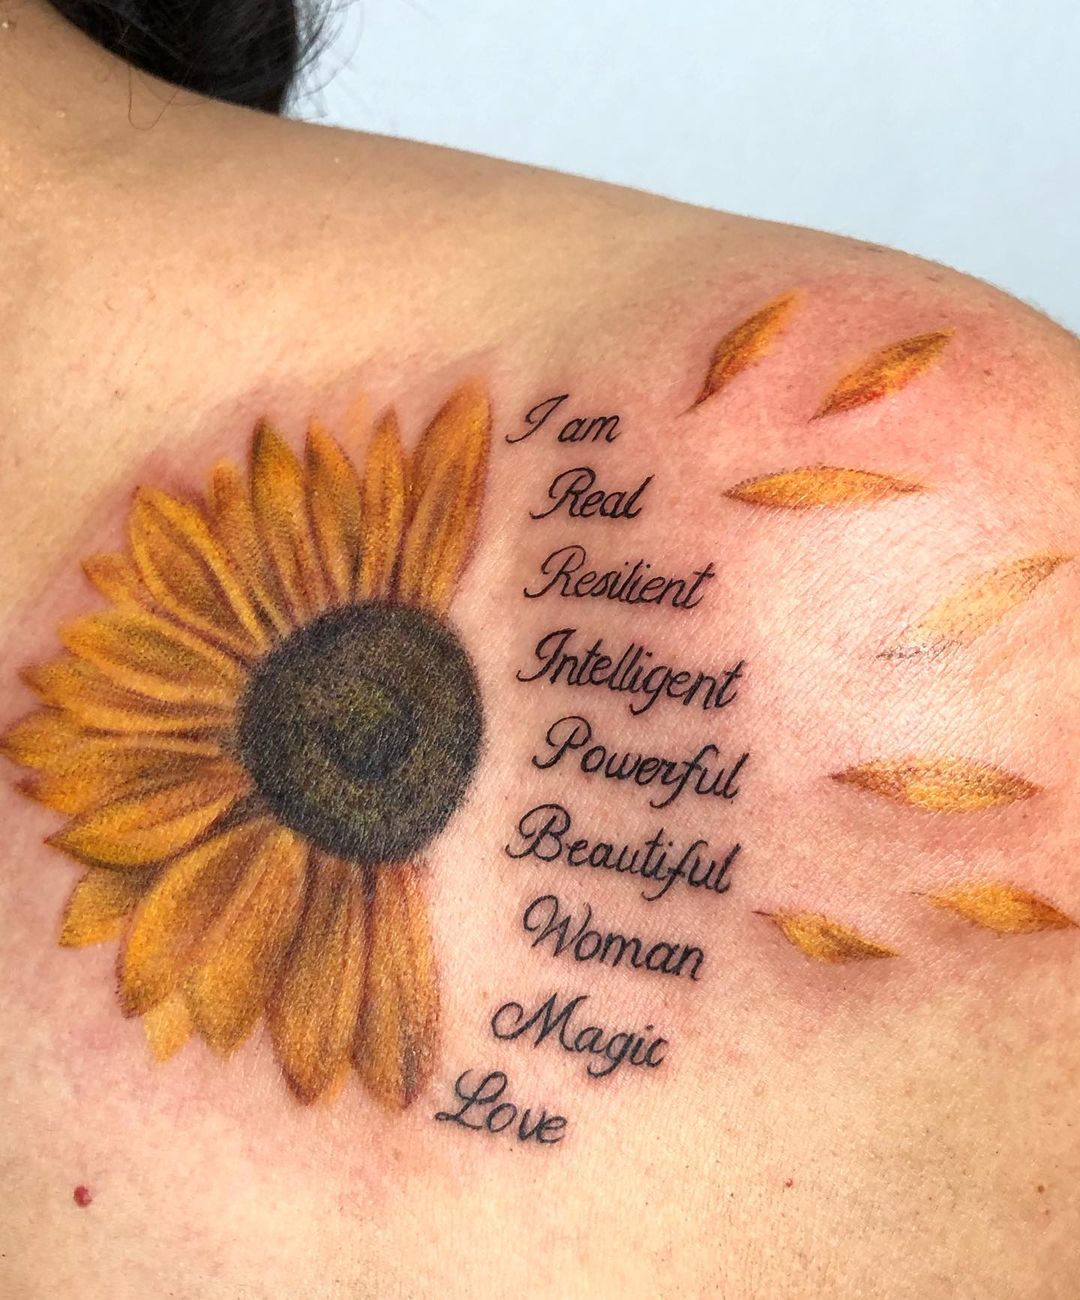 sunflower shoulder tattoos